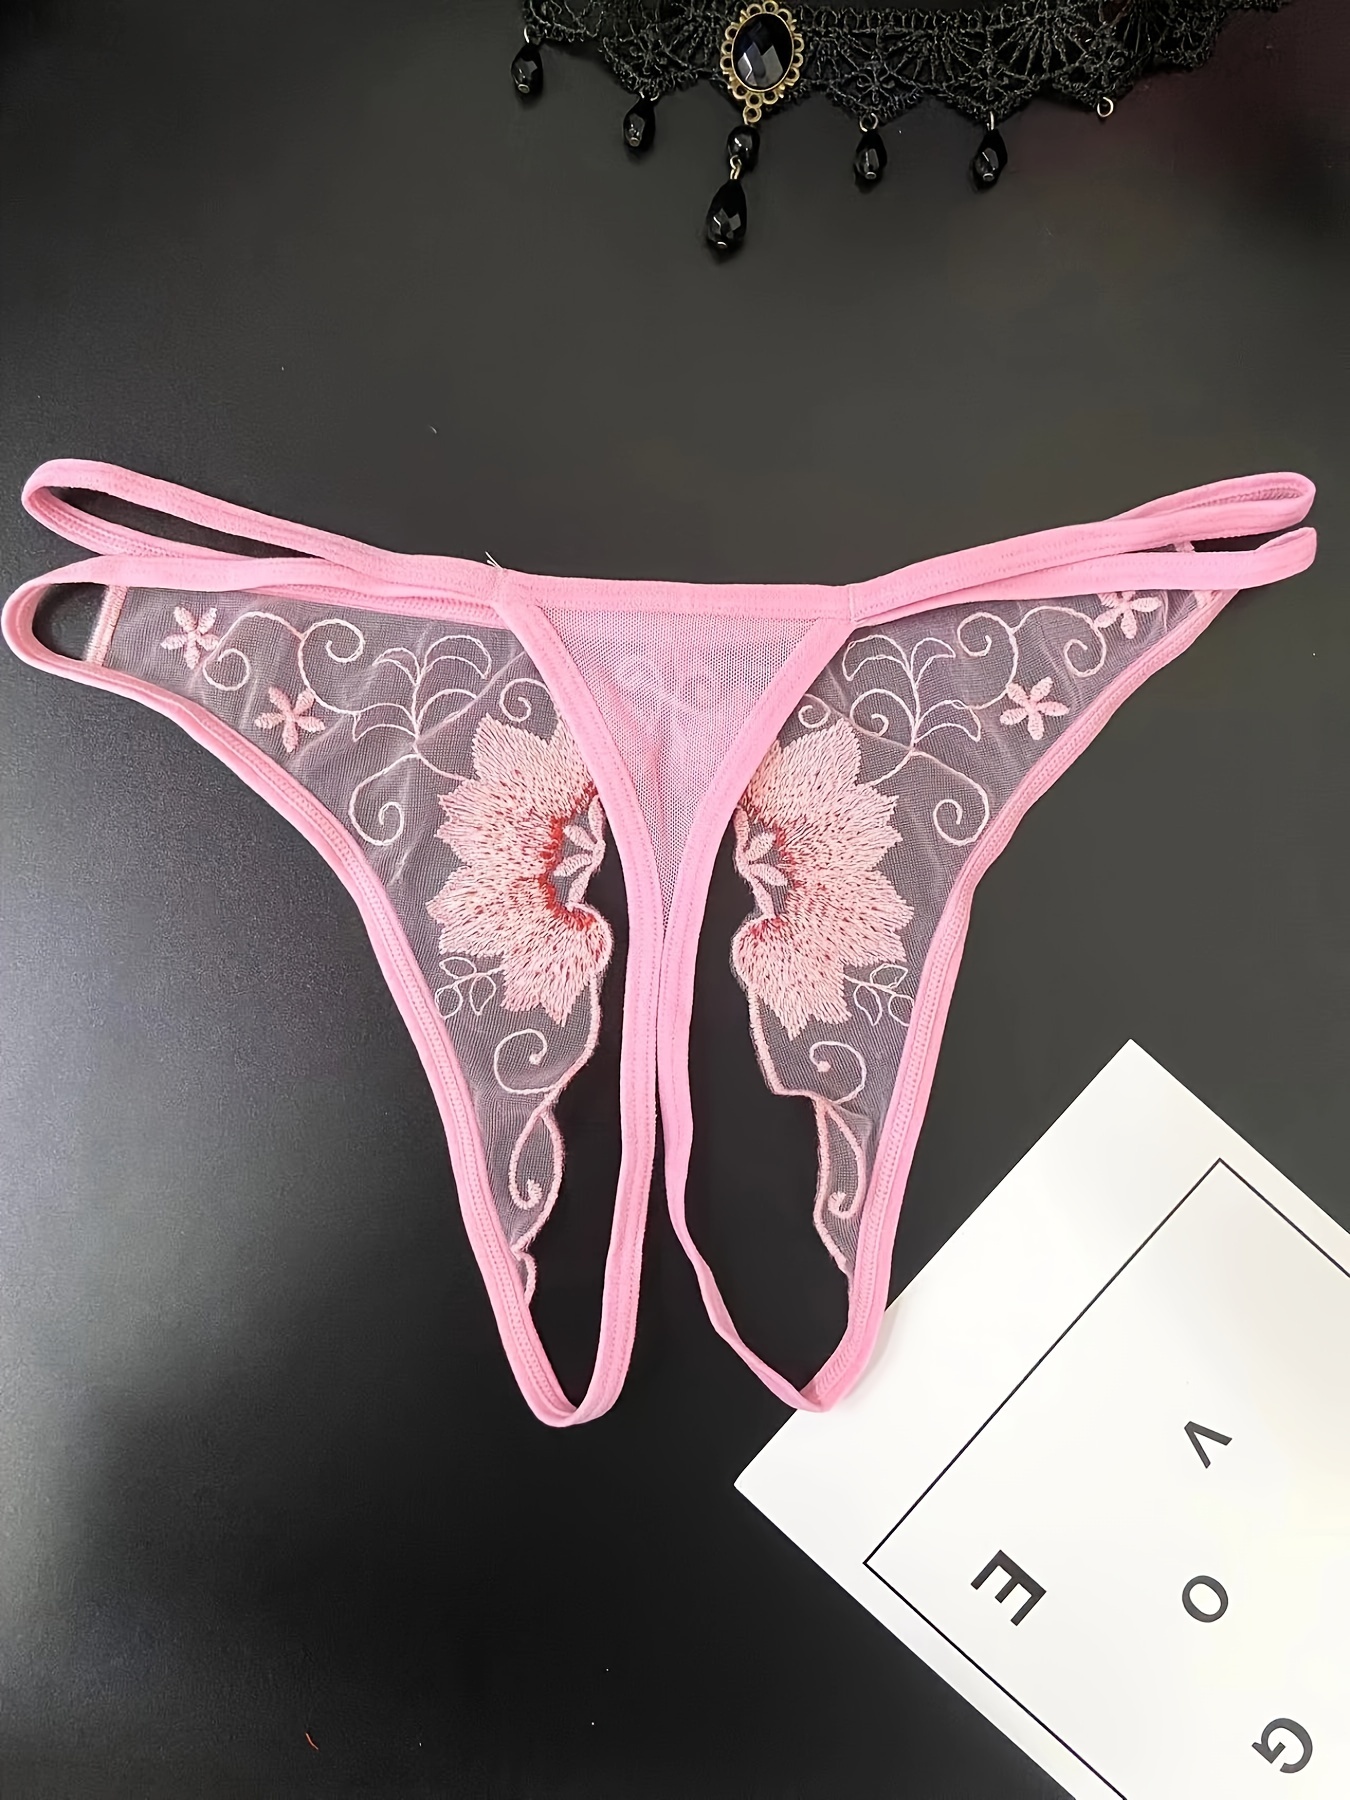 Hot Sale Embroidered Lace Women's Underwear Transparent Low Waist